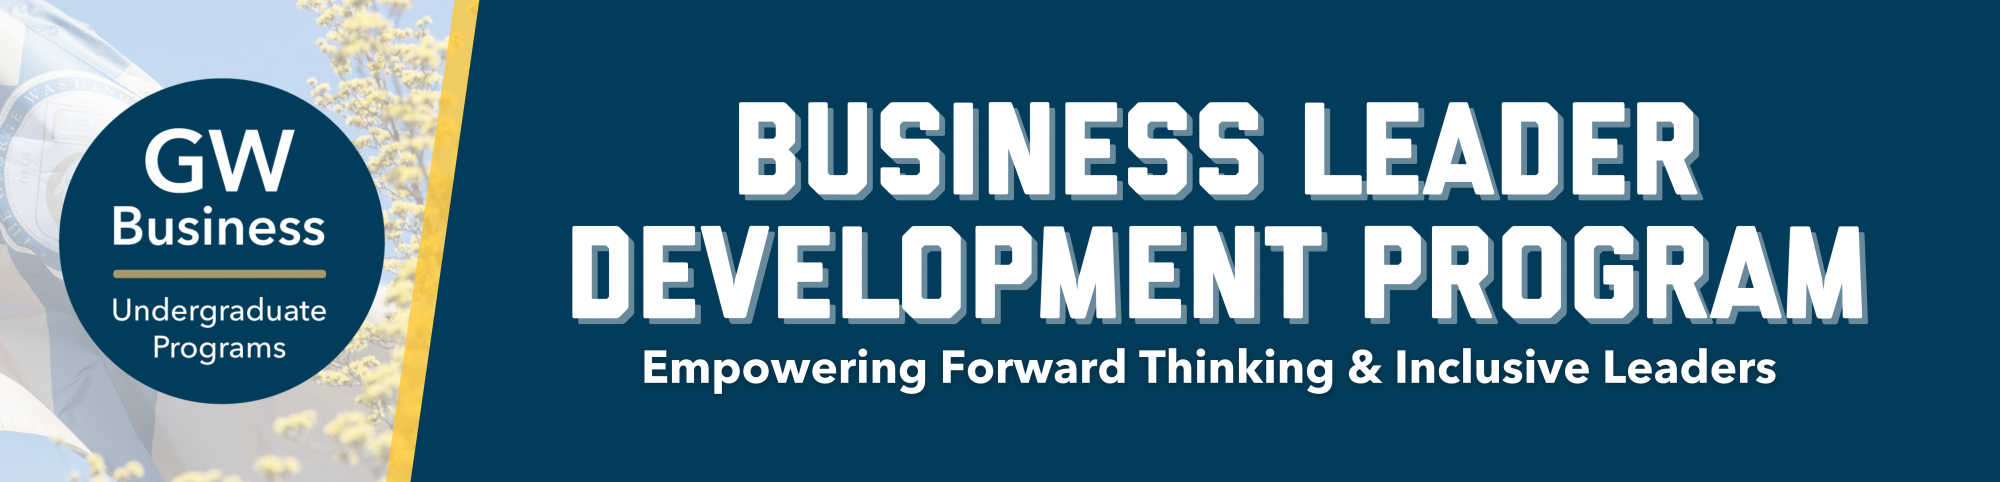 GWSB Office of Undergraduate Programs Business Leader Development Program Banner